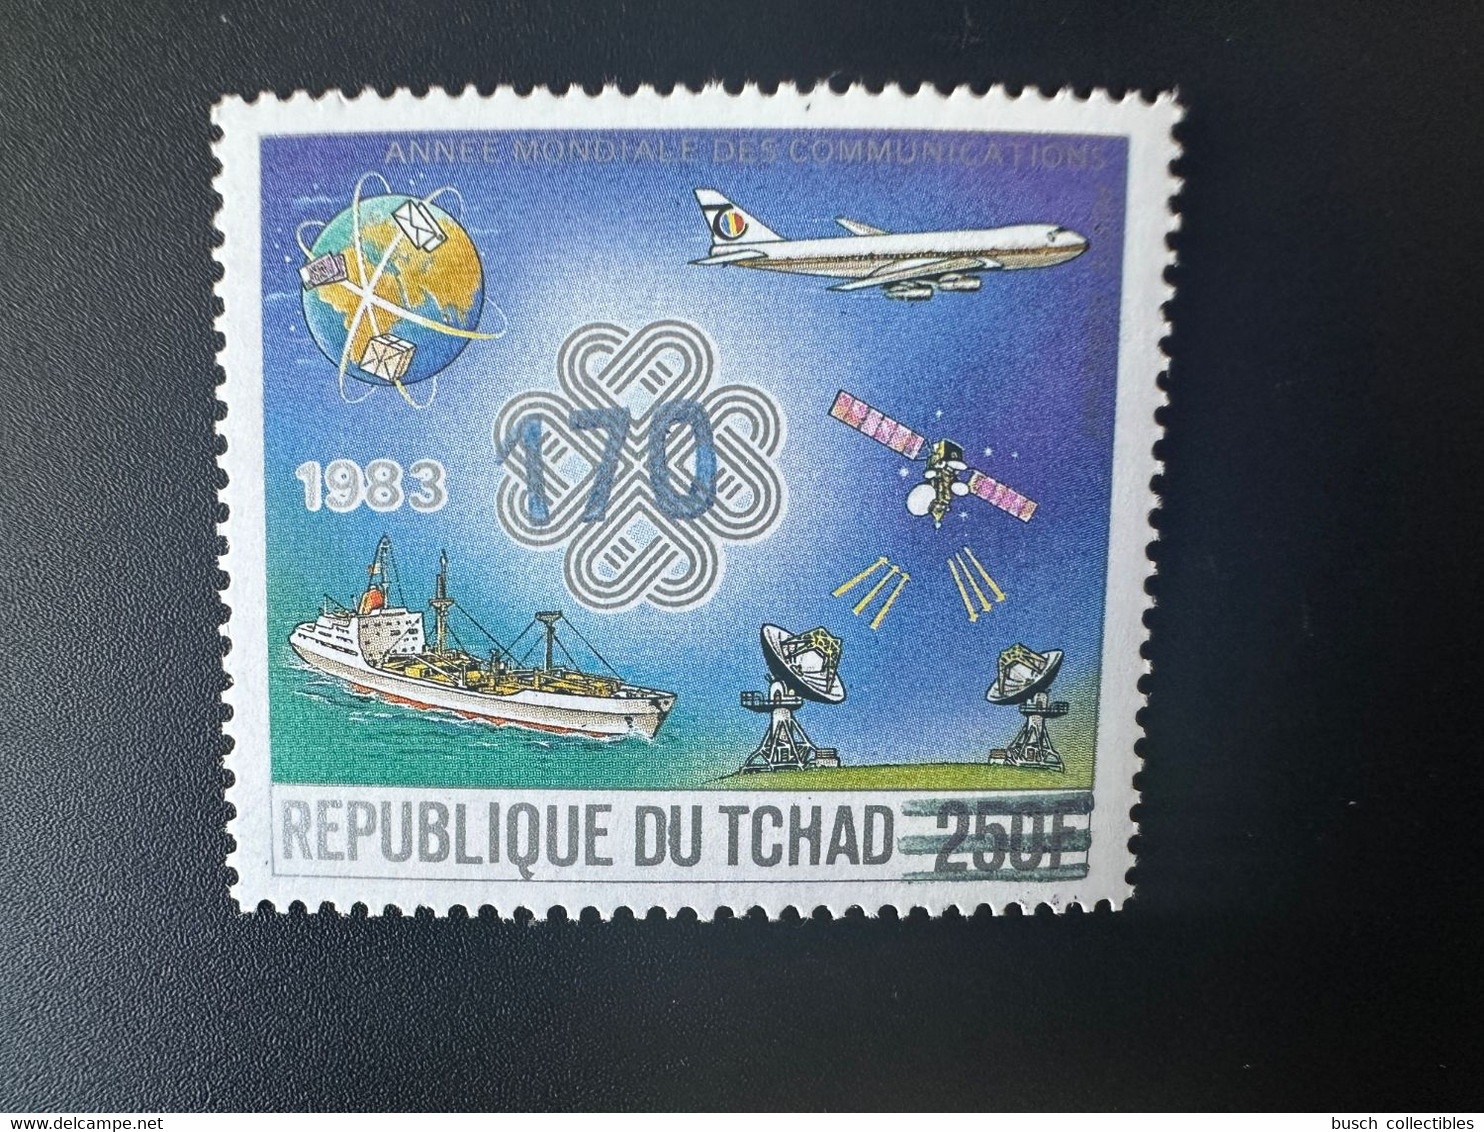 Tchad Chad Tschad 1987 / 1988 Mi. 1147 Surchargé Overprint Année Mondiale Des Communications Avion Airplane Flugzeug - Tschad (1960-...)